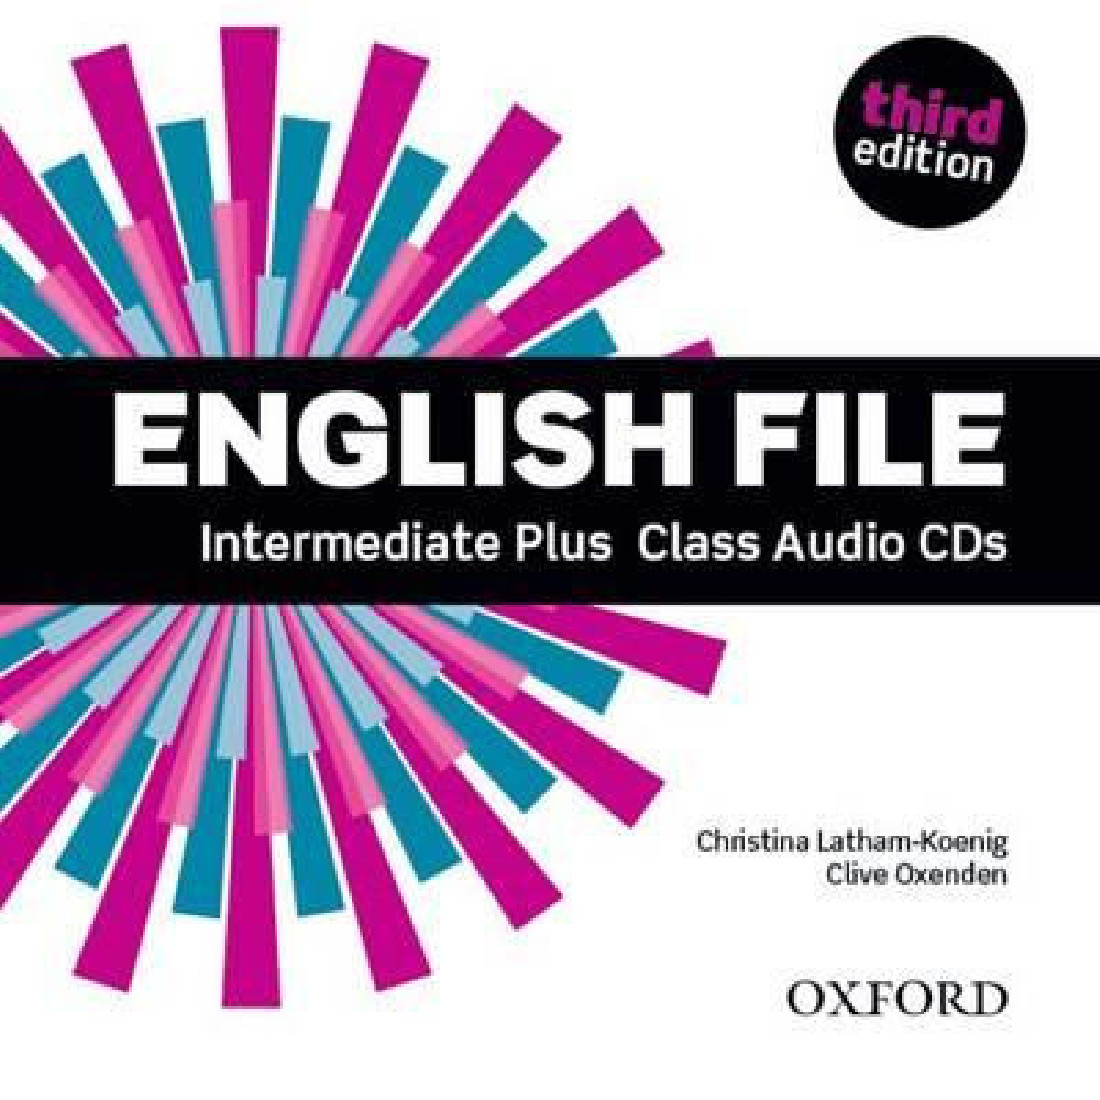 ENGLISH FILE 3RD EDITION INTERMEDIATE PLUS CDs